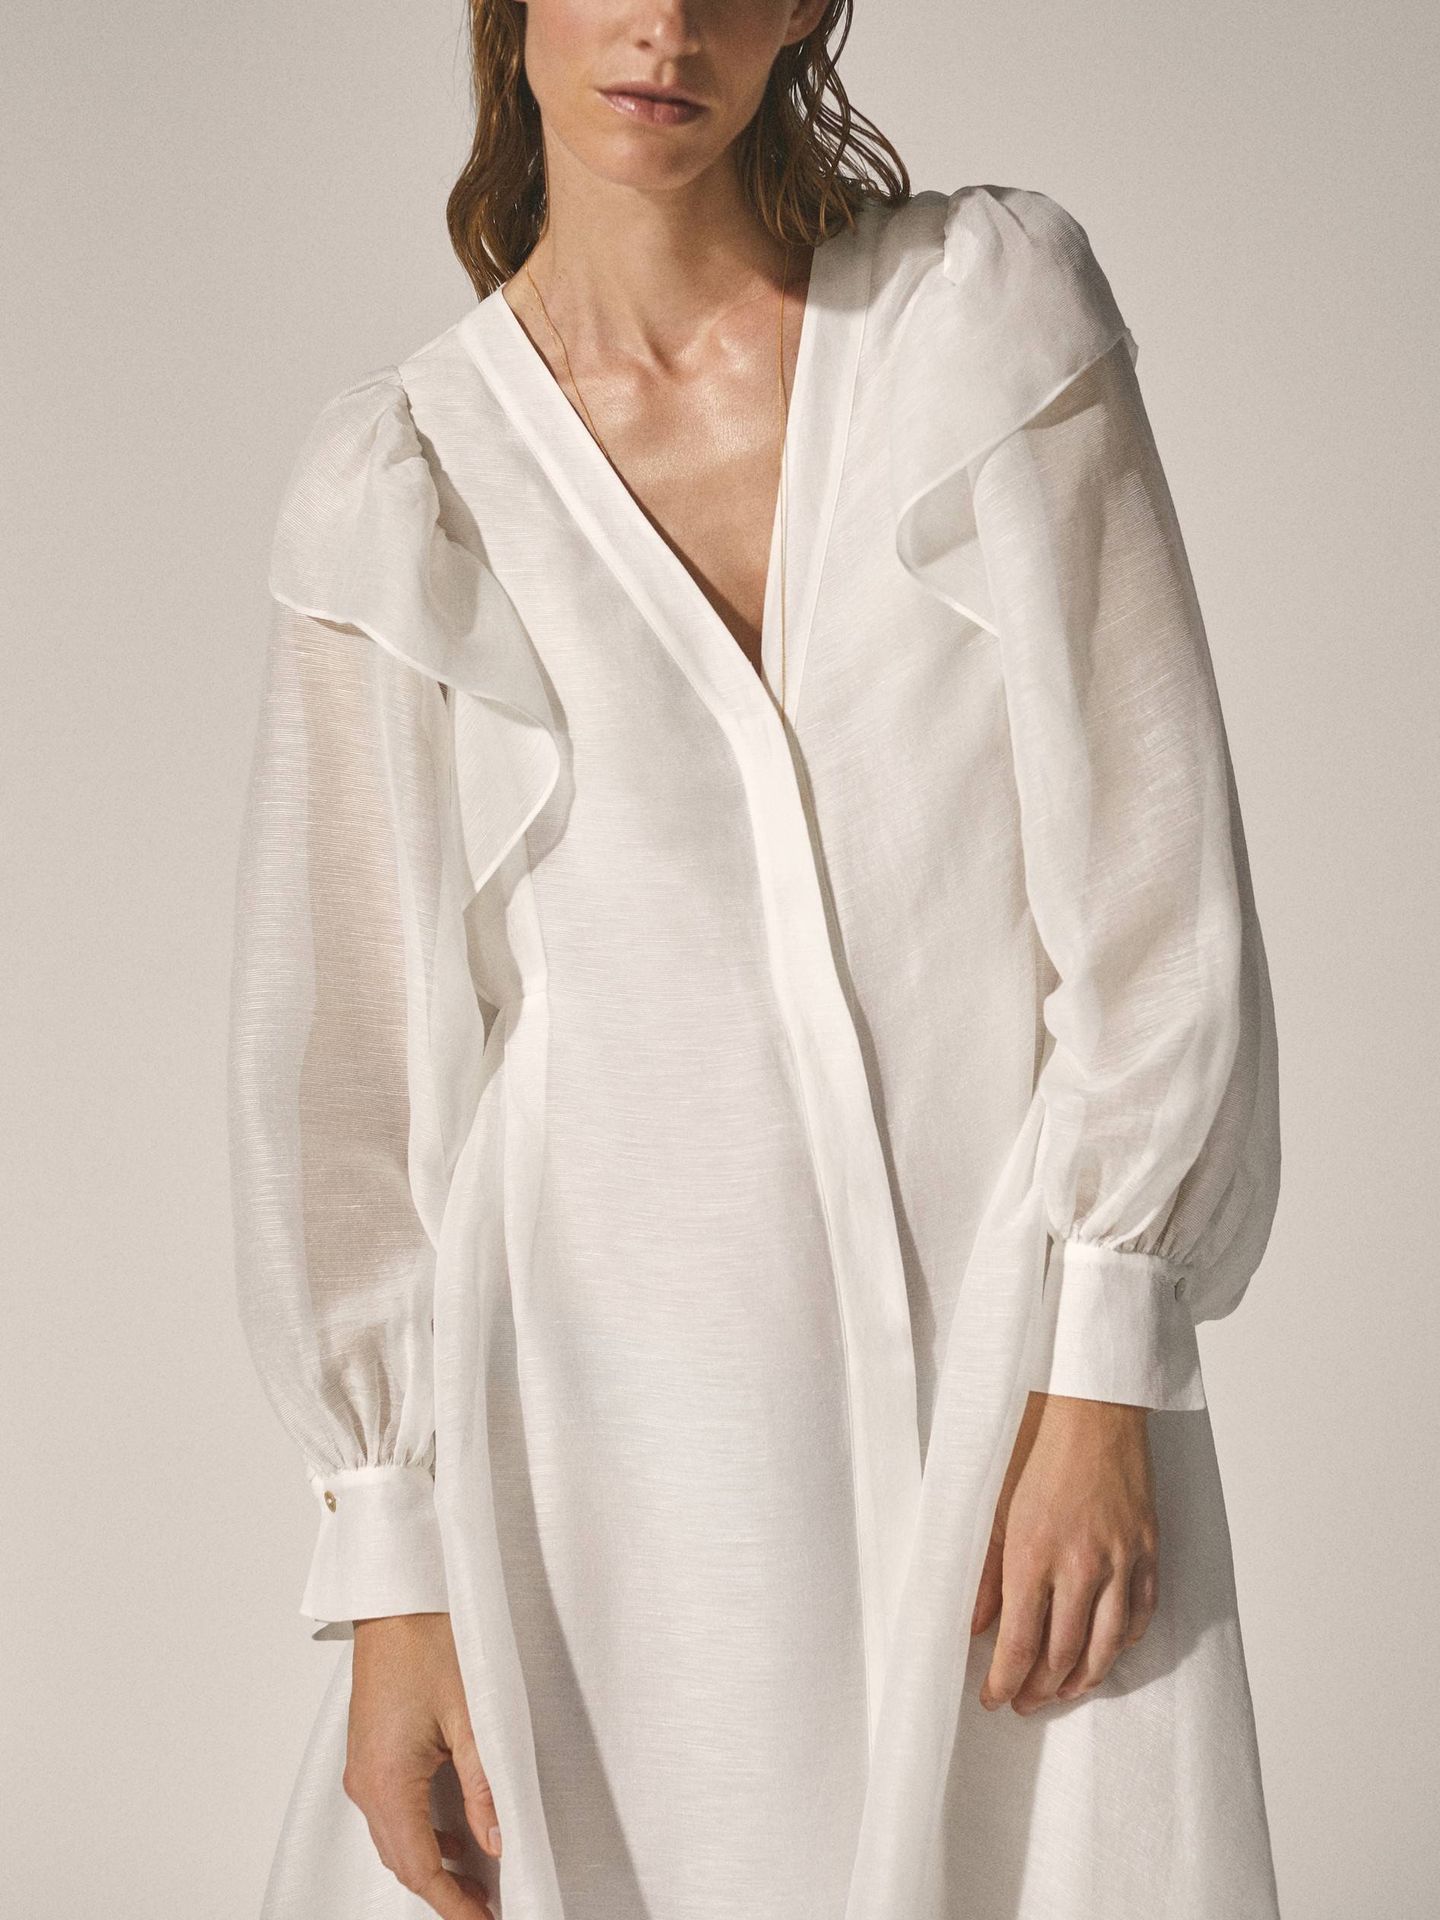 Vestido blanco de Massimo Dutti. (Cortesía)